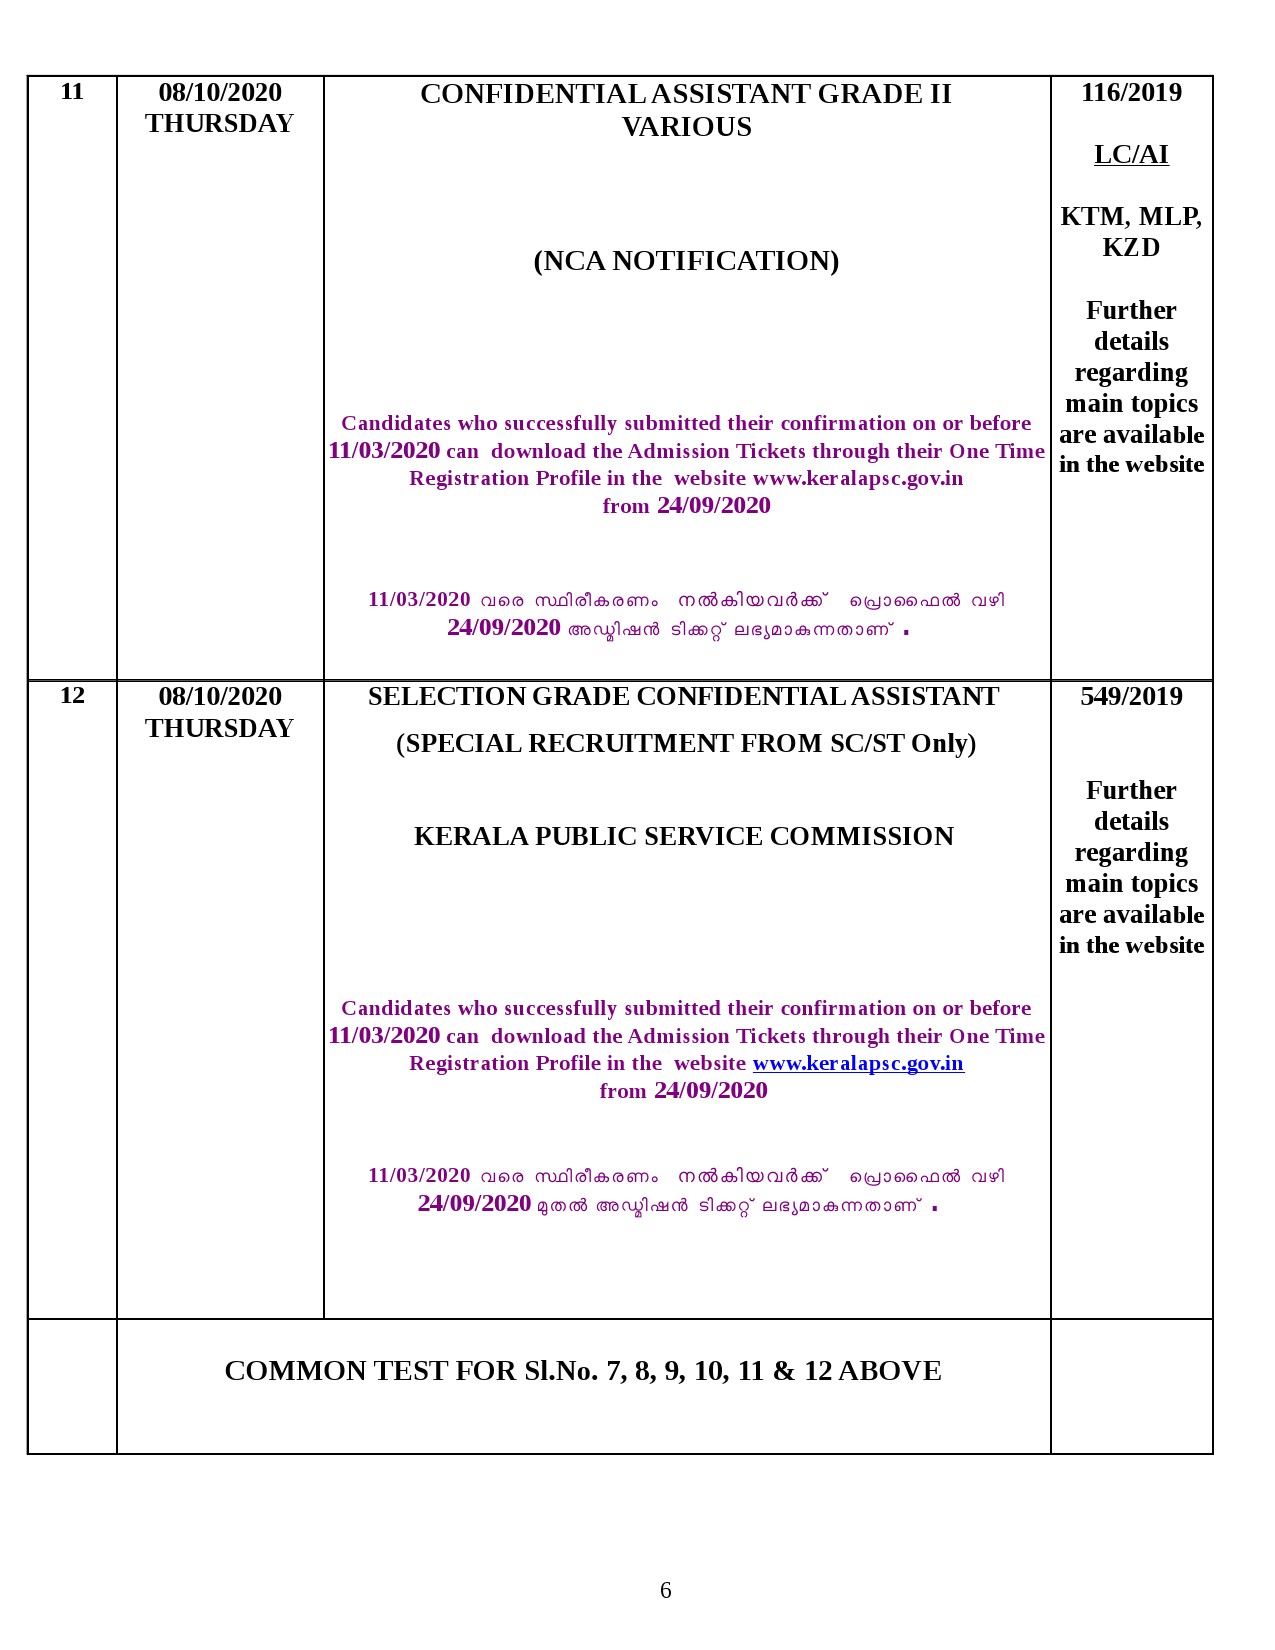 Kerala PSC Exam Calendar October 2020 - Notification Image 6